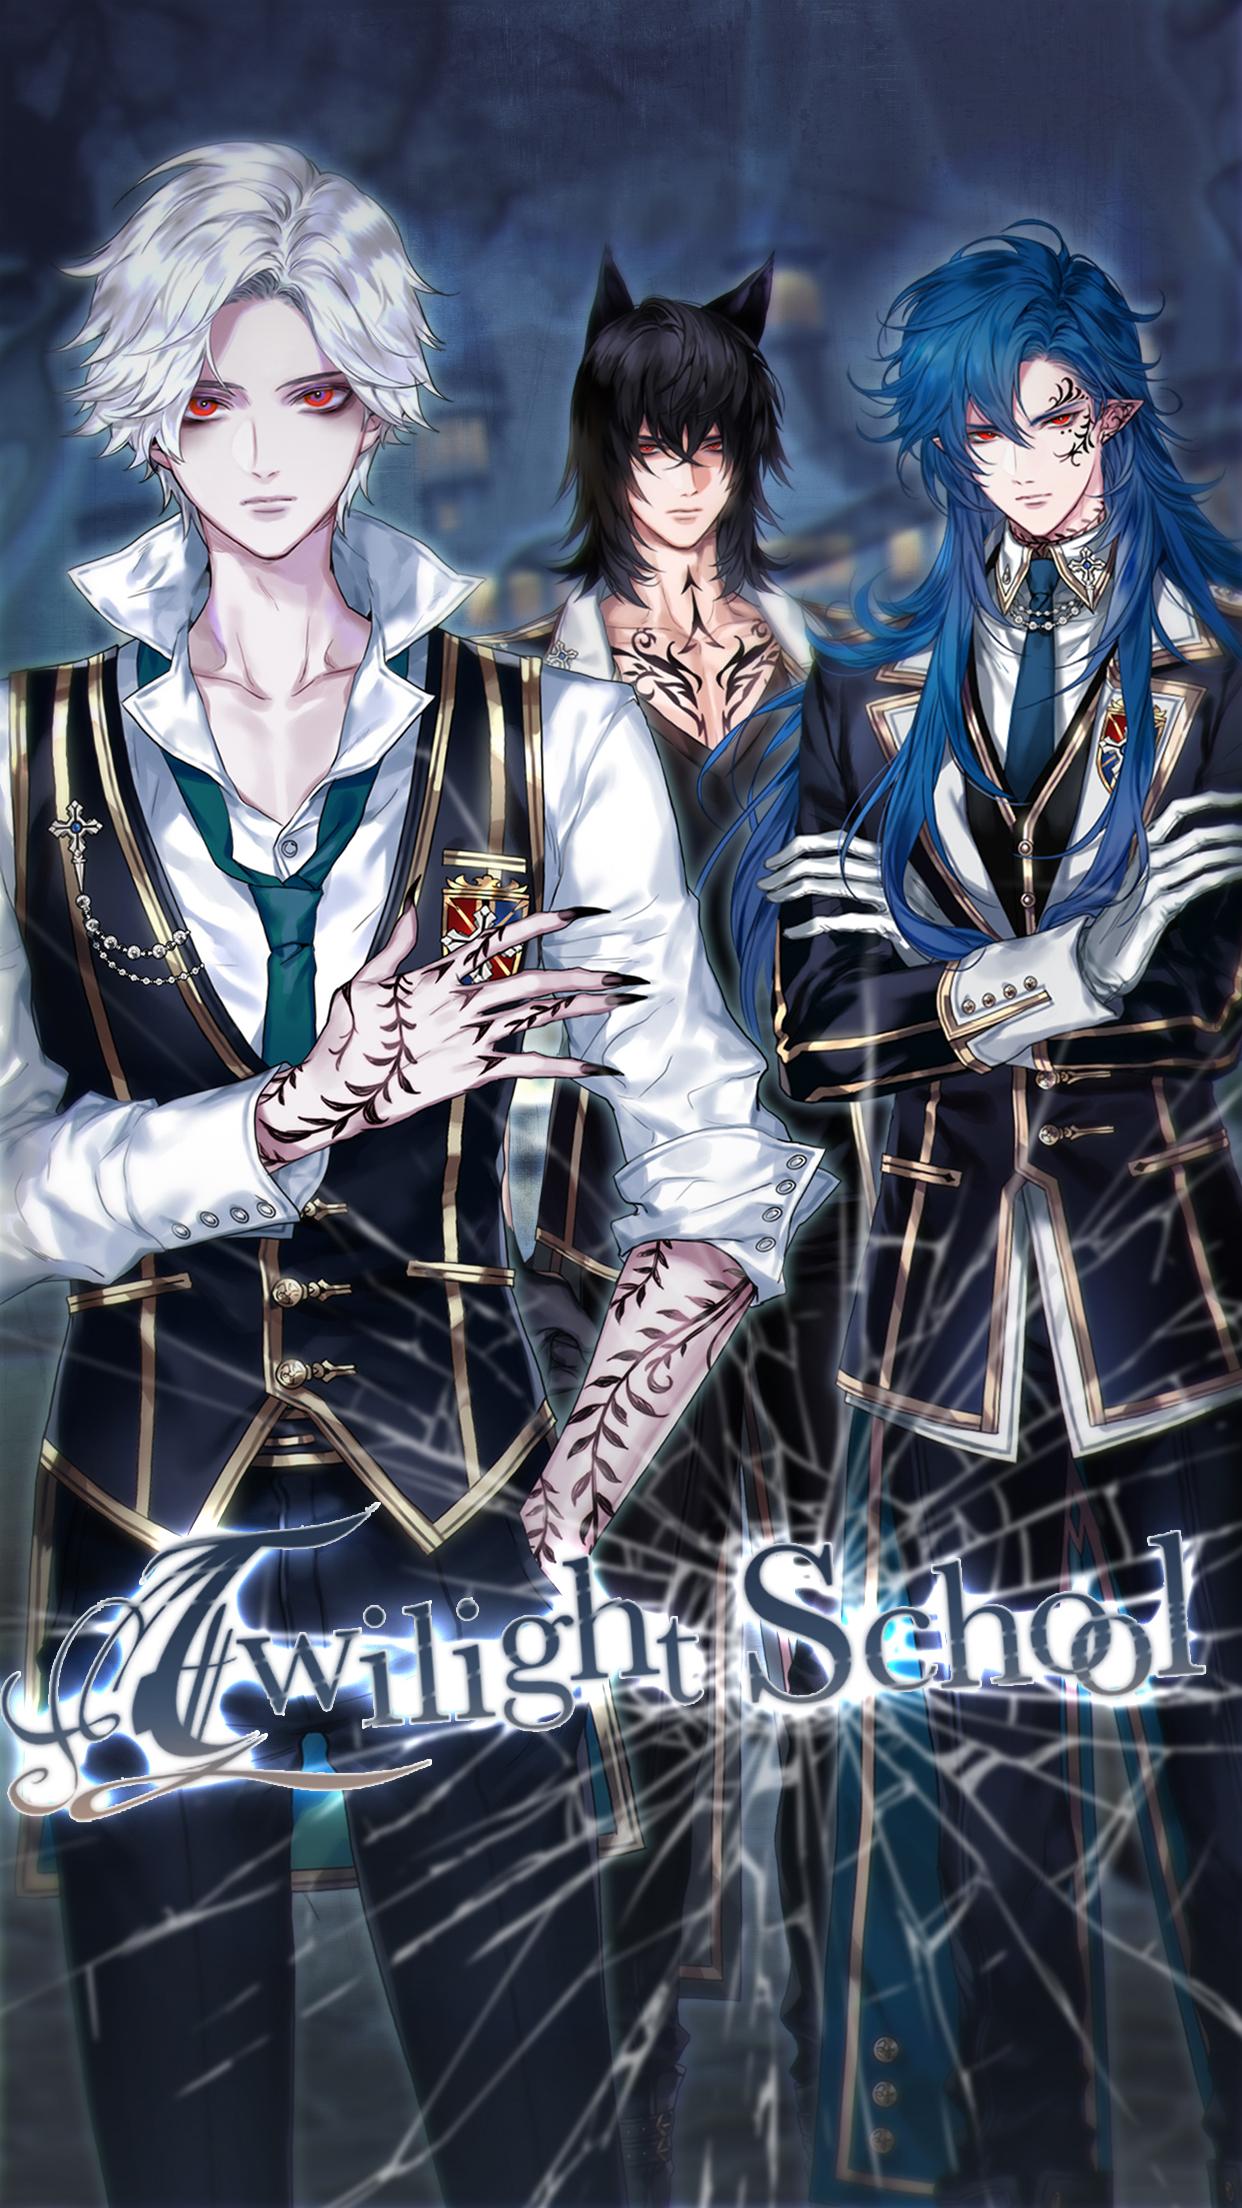 Twilight School : Anime Otome Virtual Boyfriend APK  for Android –  Download Twilight School : Anime Otome Virtual Boyfriend XAPK (APK Bundle)  Latest Version from 